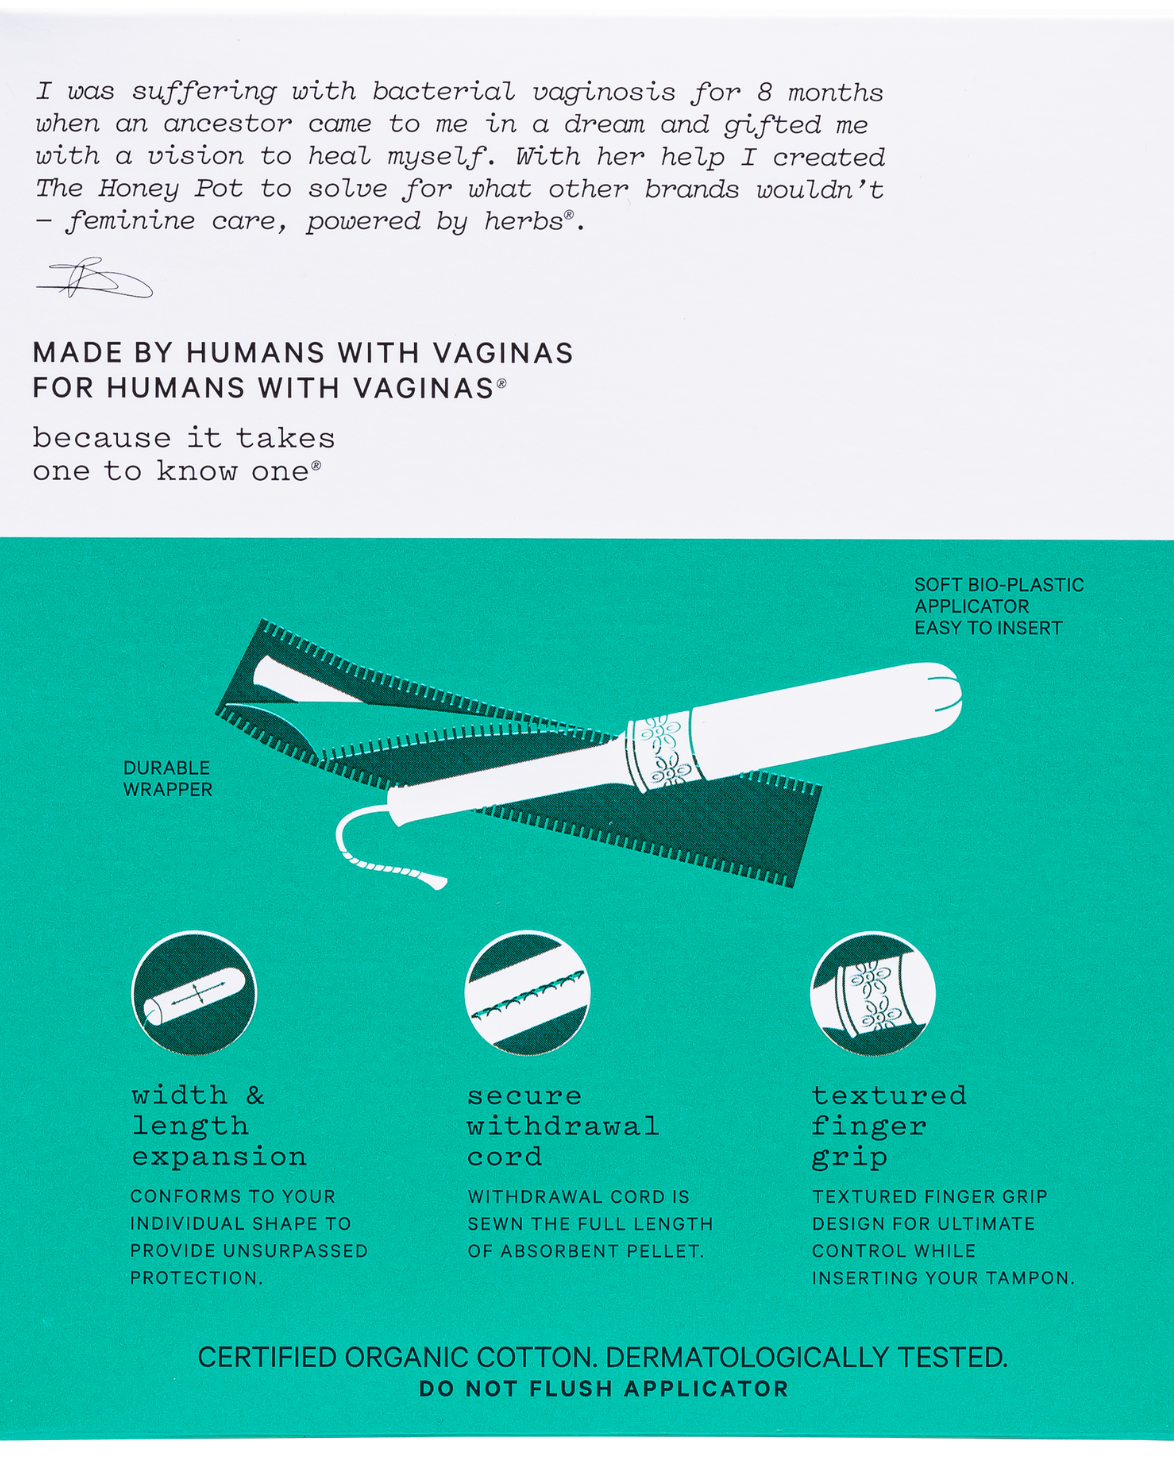 Tampons: Not just for feminine hygiene